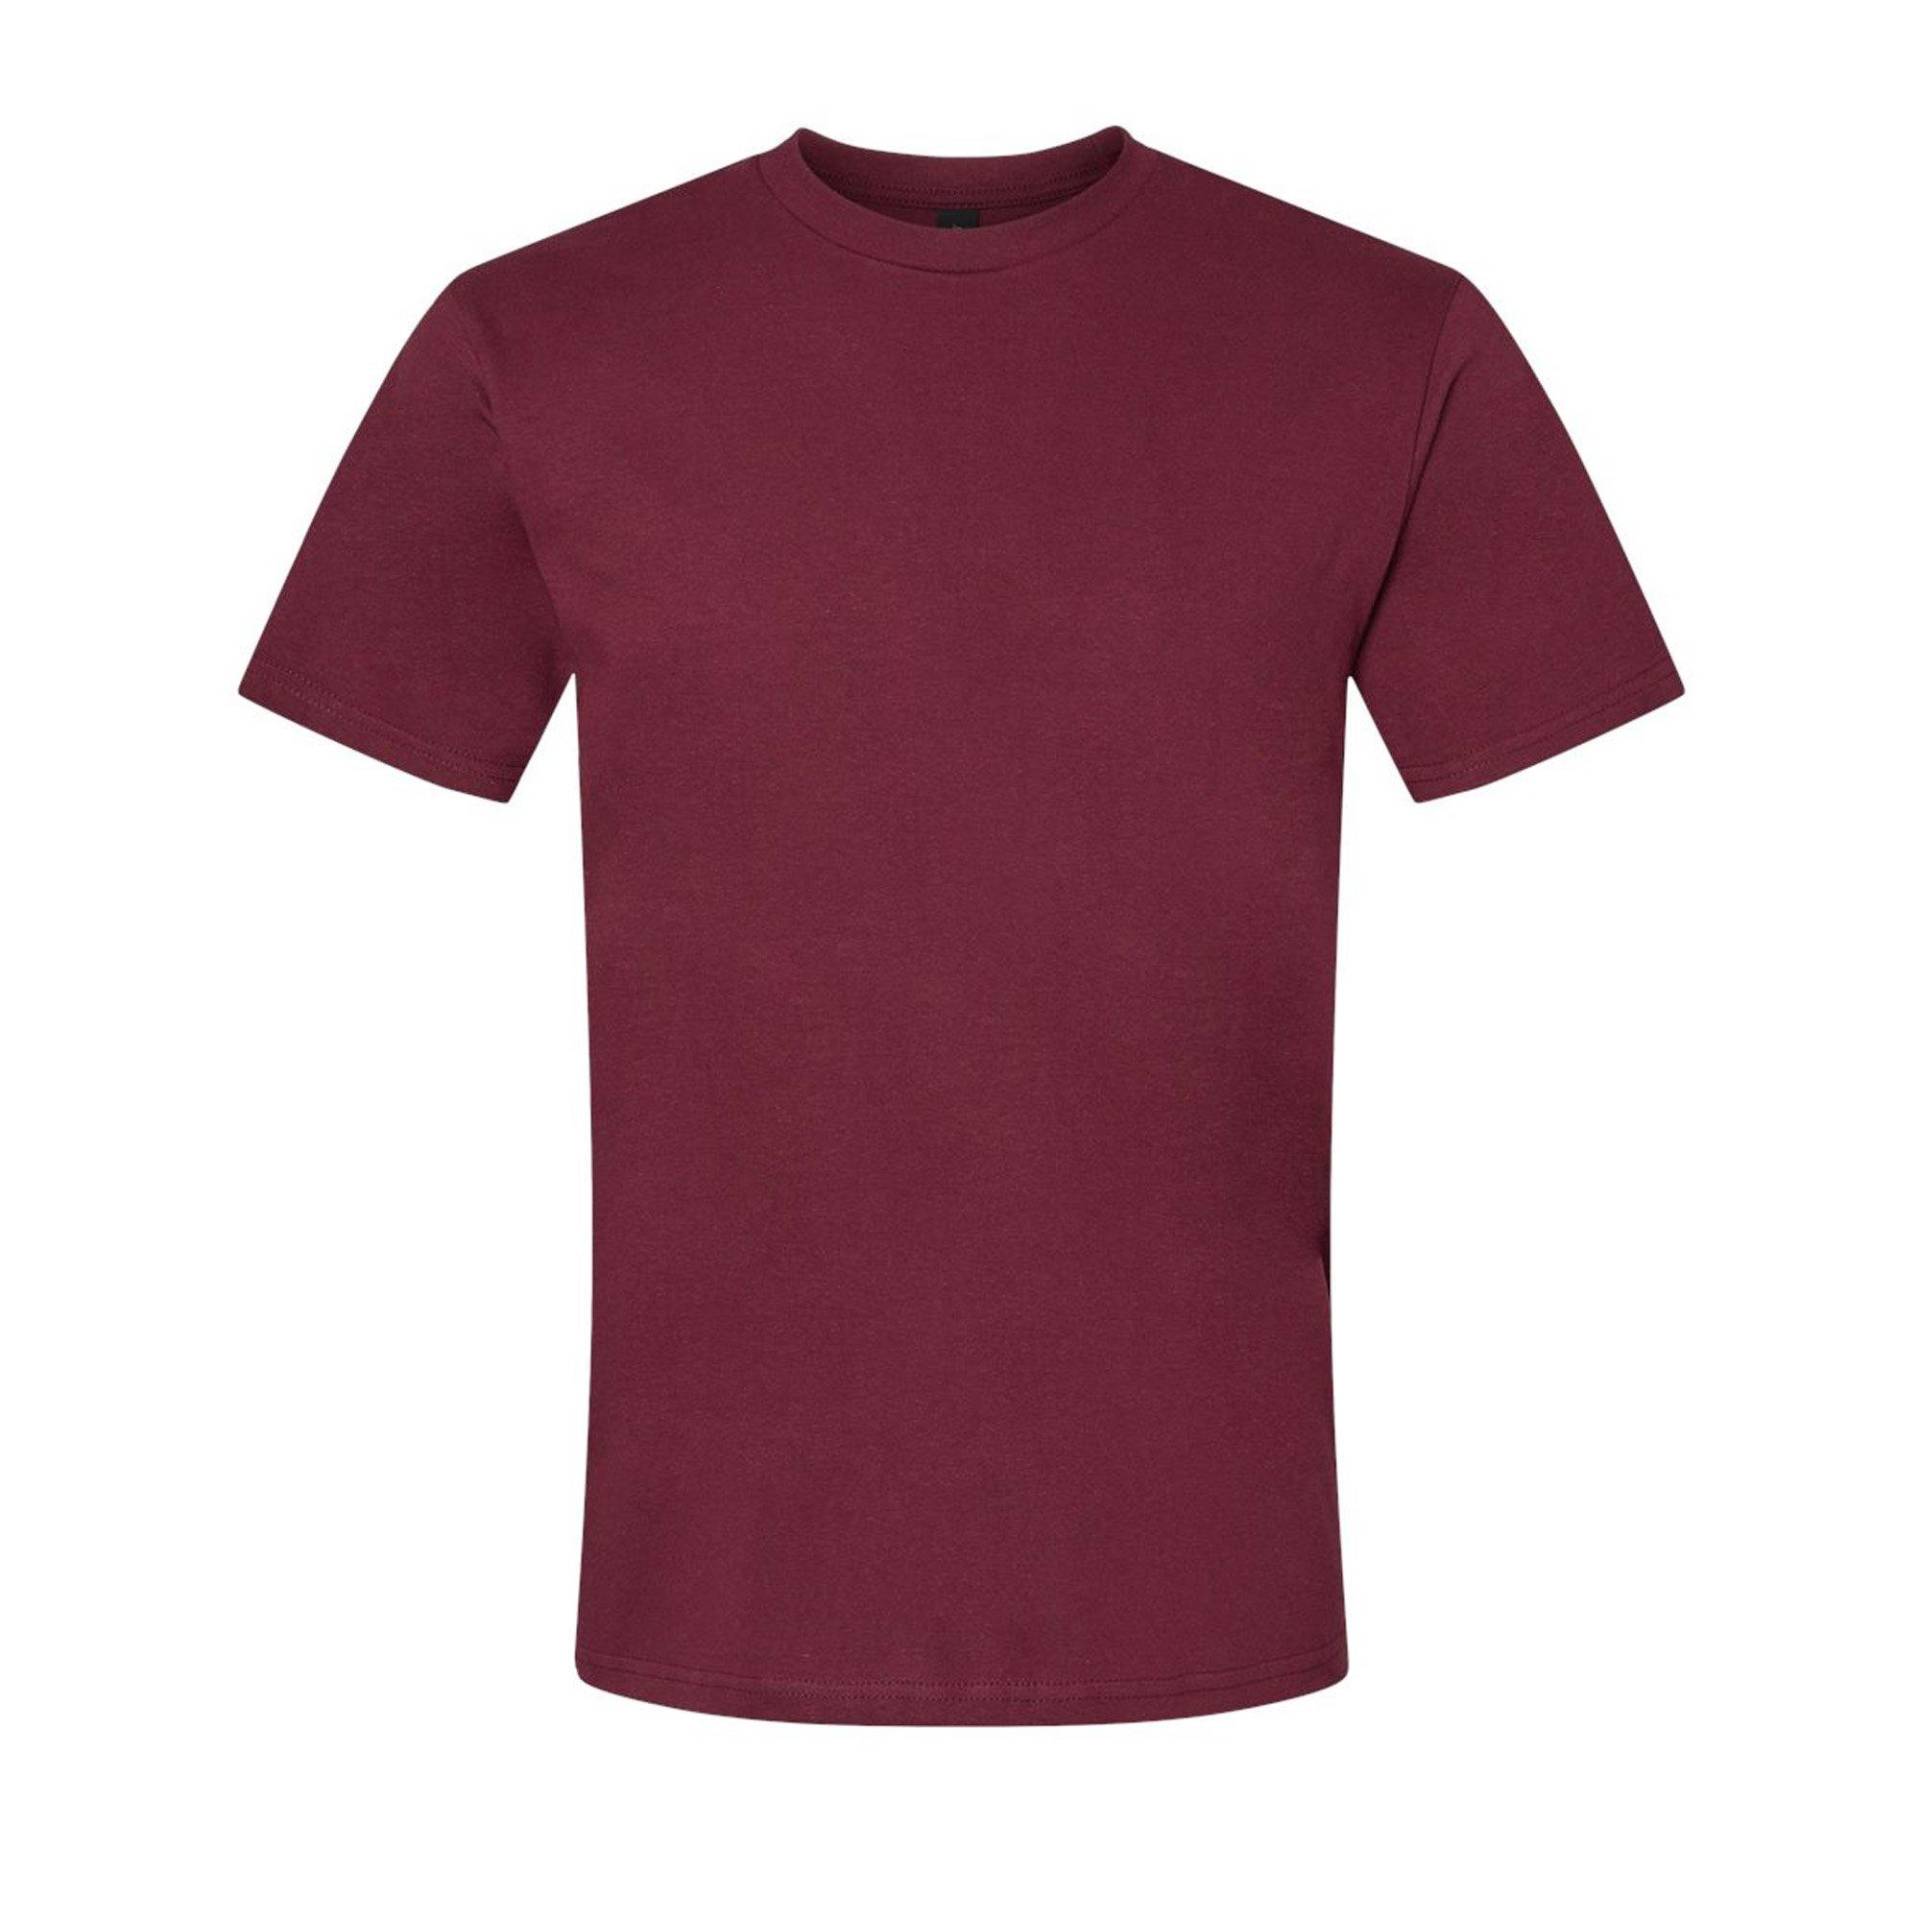 Softstyle Tshirt Damen Bordeaux XL von Gildan